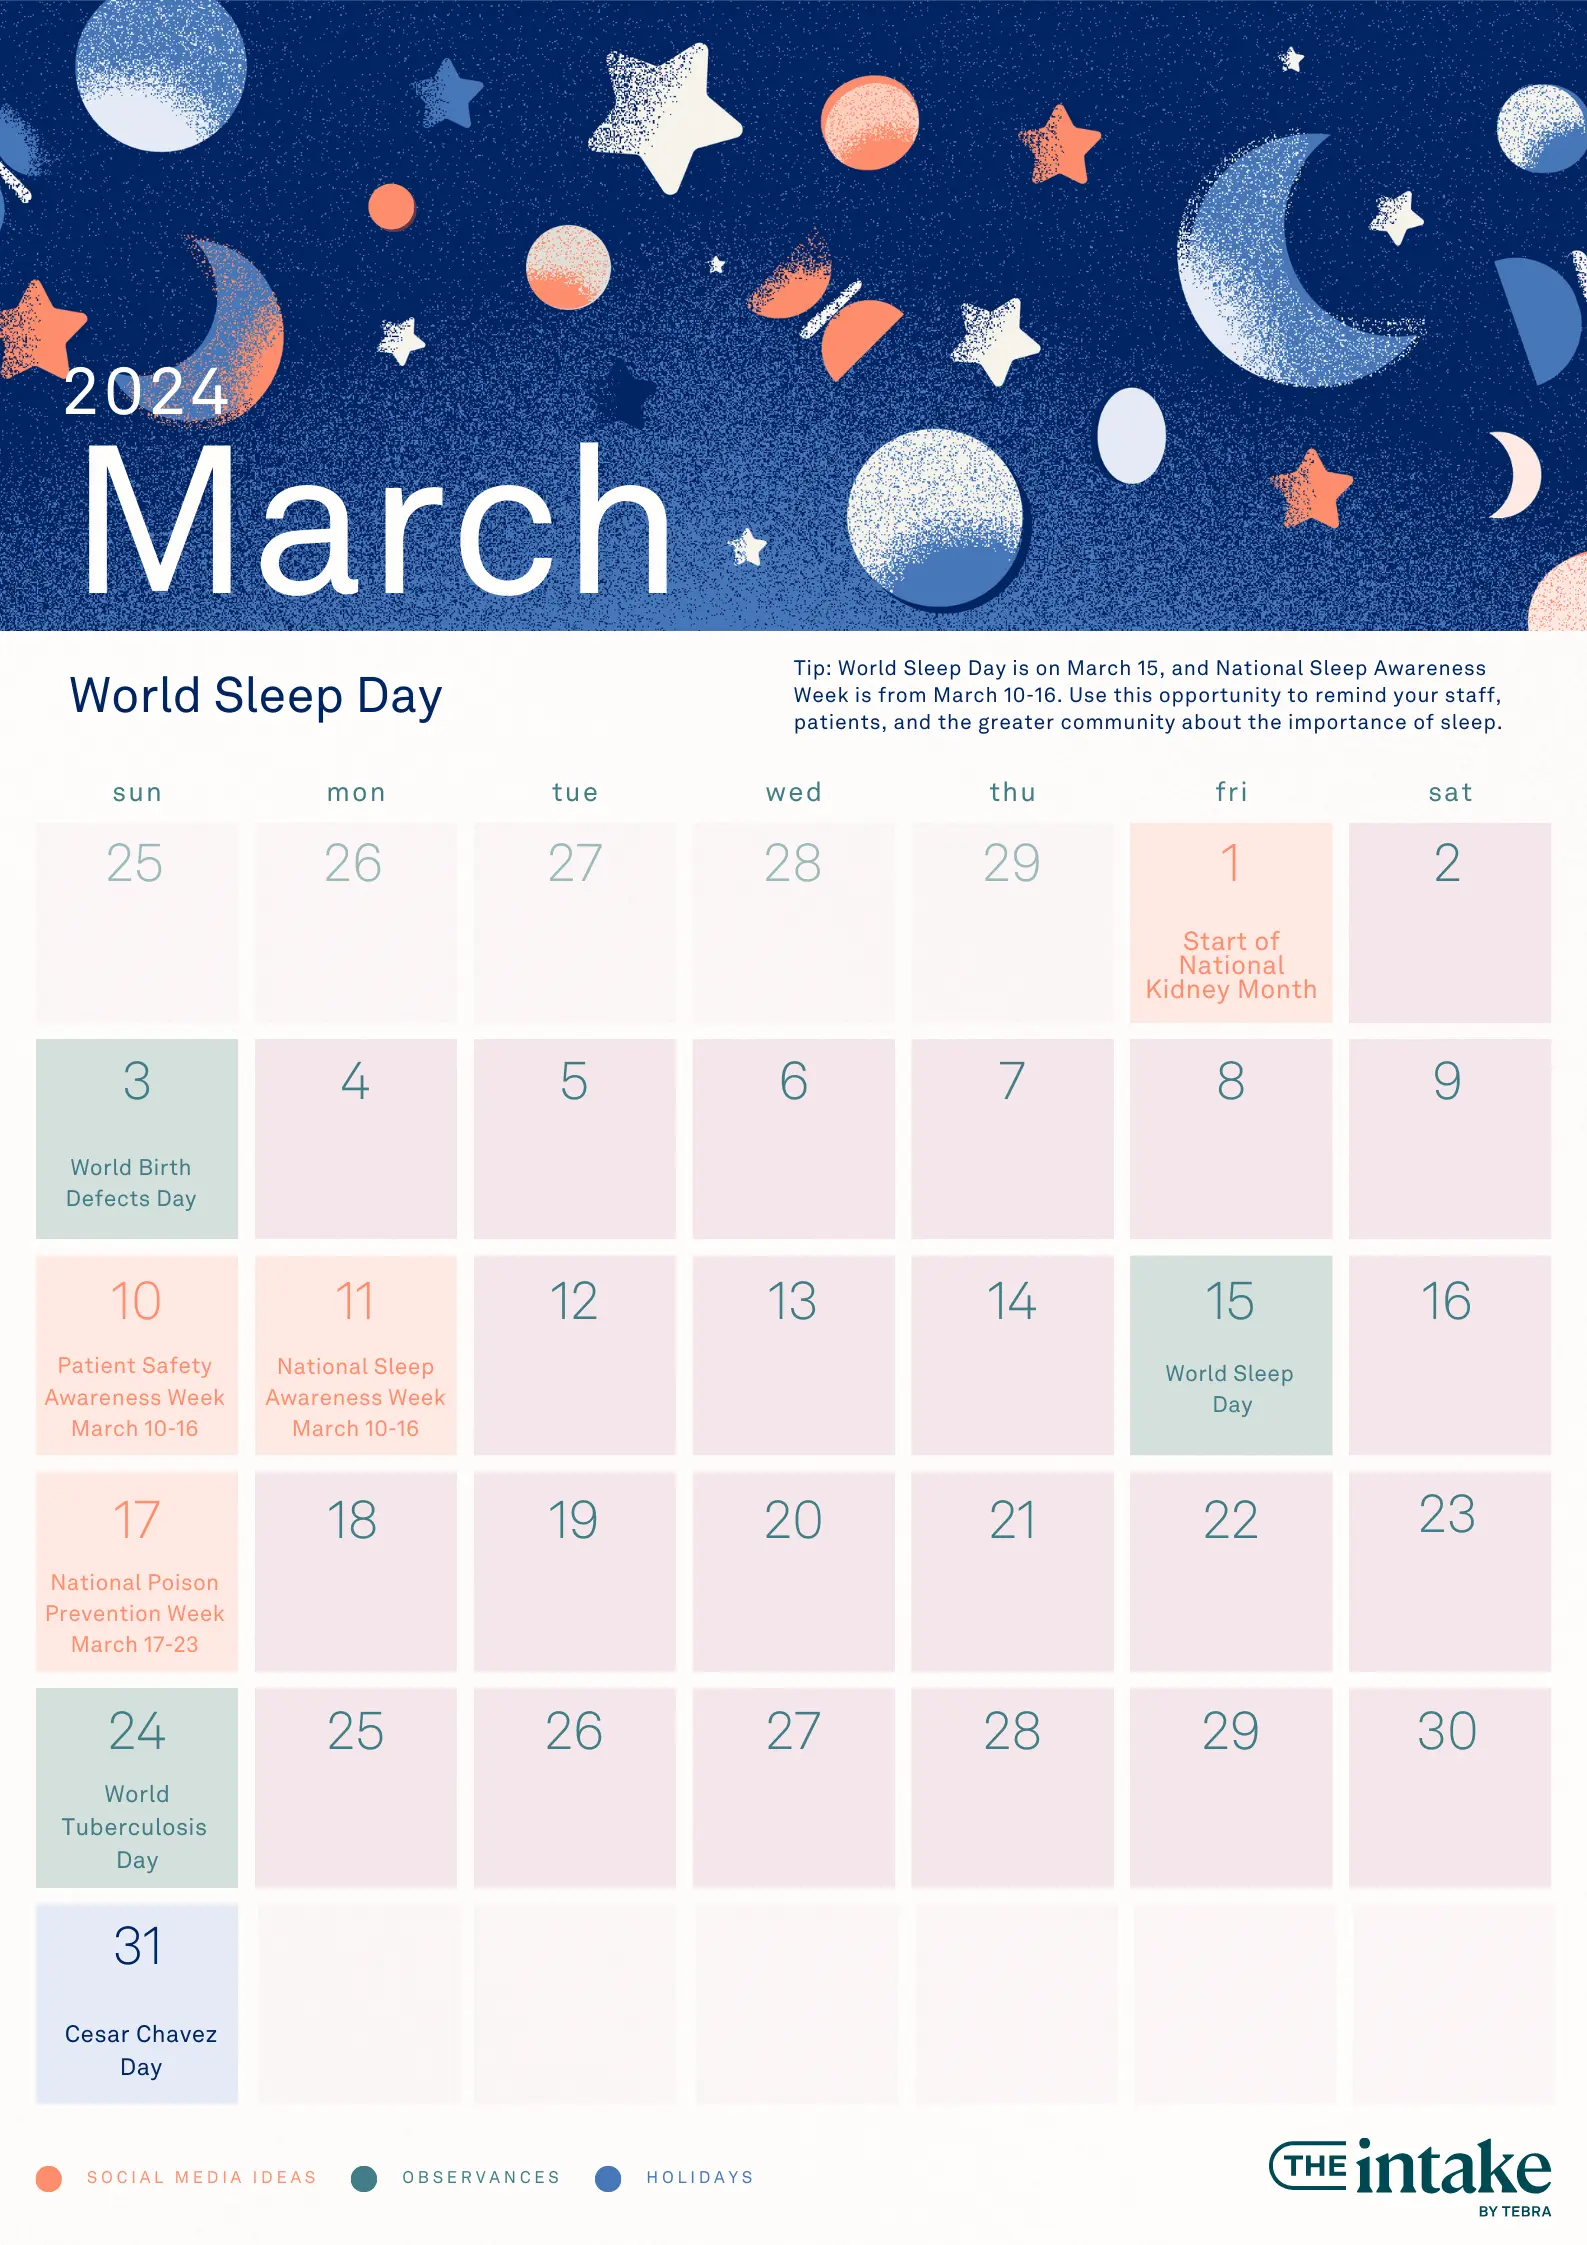 March 2024 healthcare observances calendar